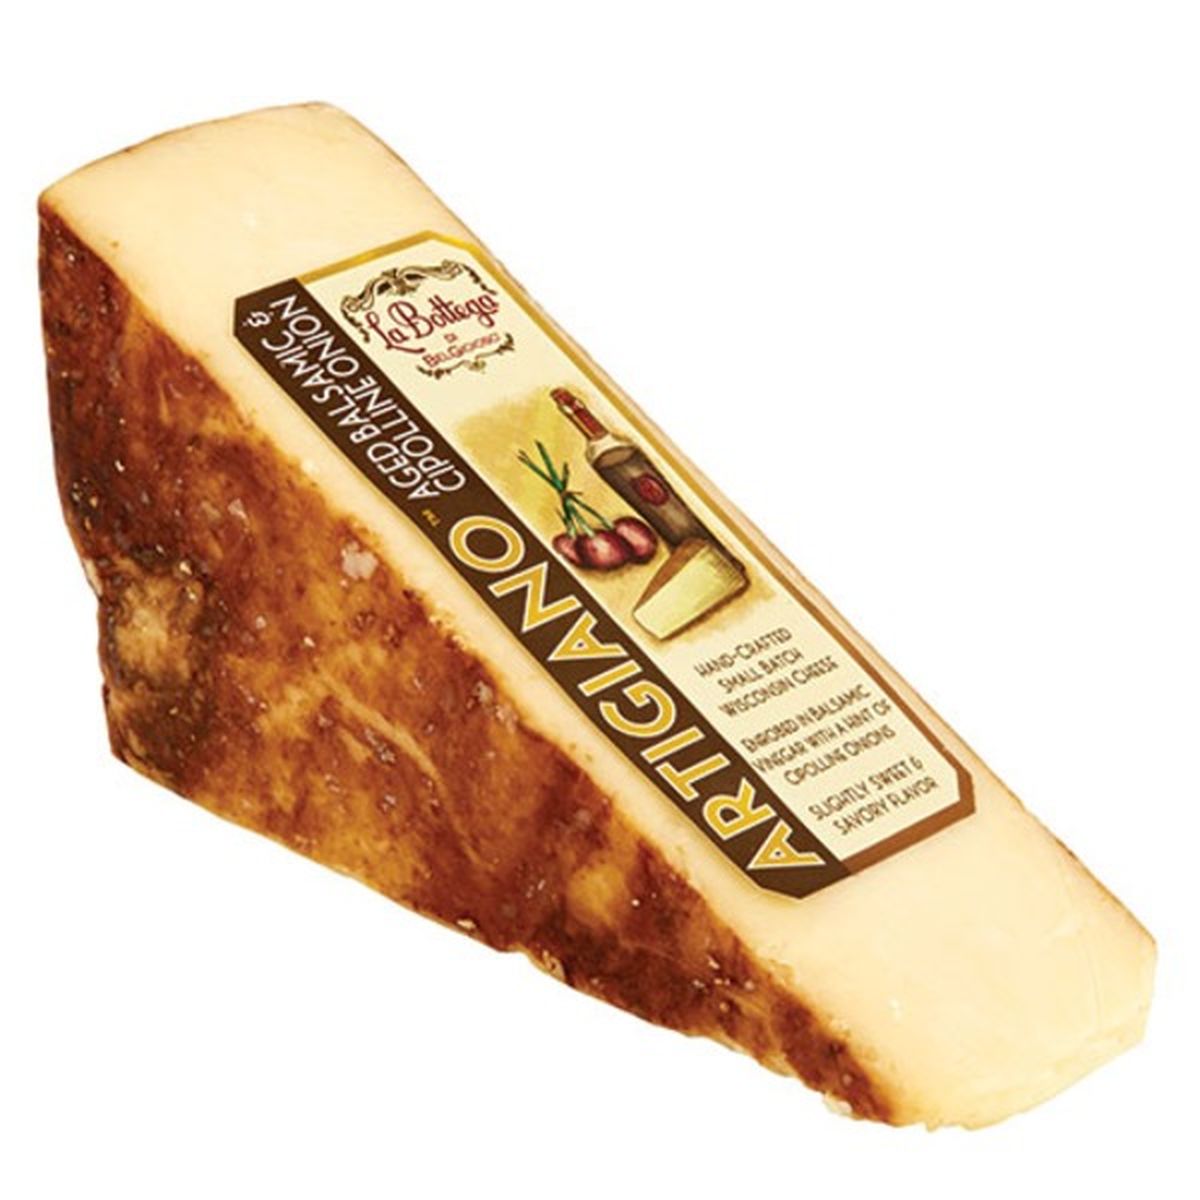 Calories in Aged Balsamic & Cipolline Artigiano Cheese